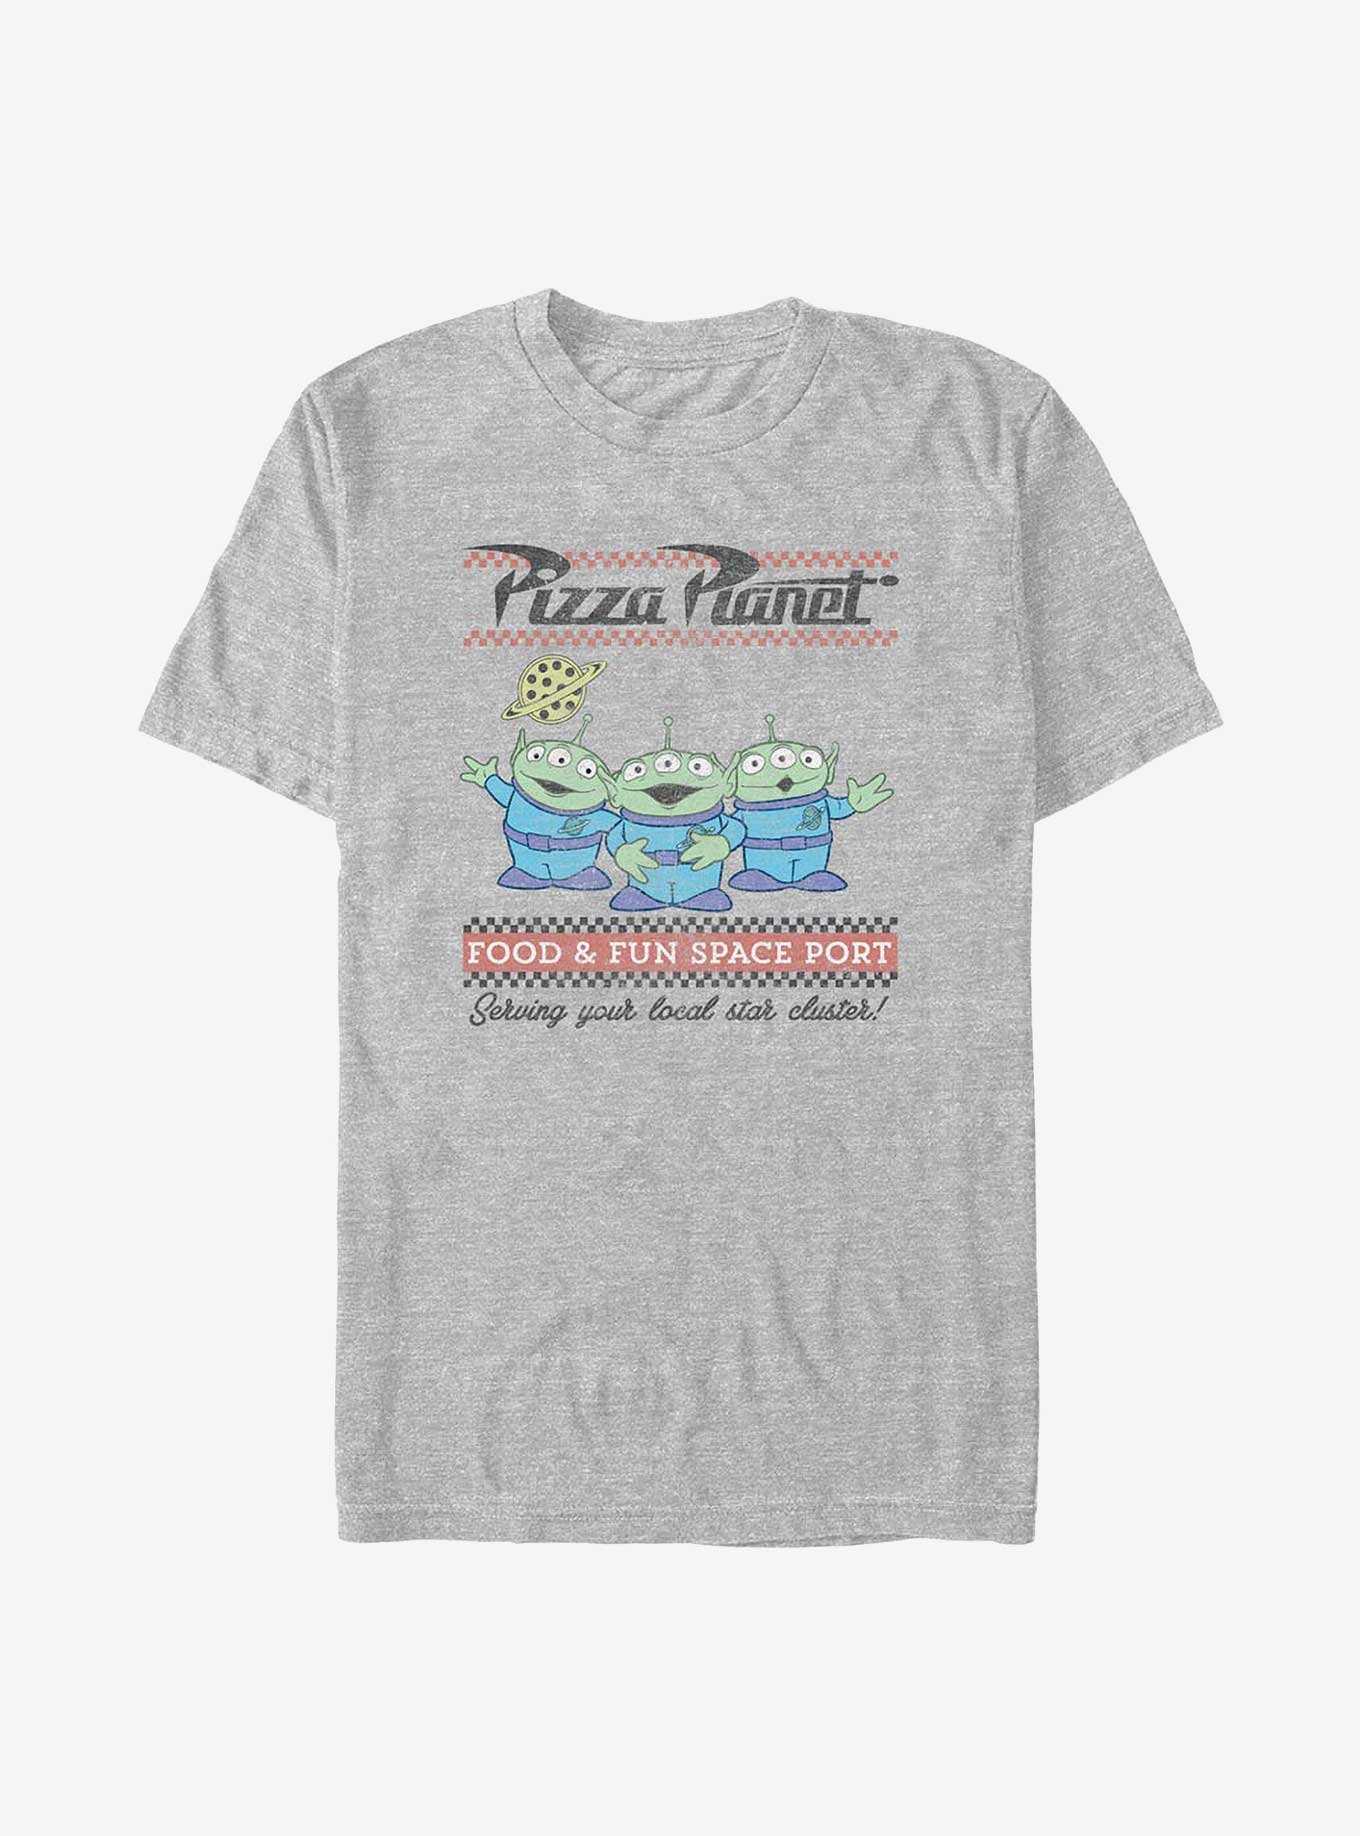 Disney Pixar Toy Story Pizza Planet Space Grub T-Shirt, , hi-res